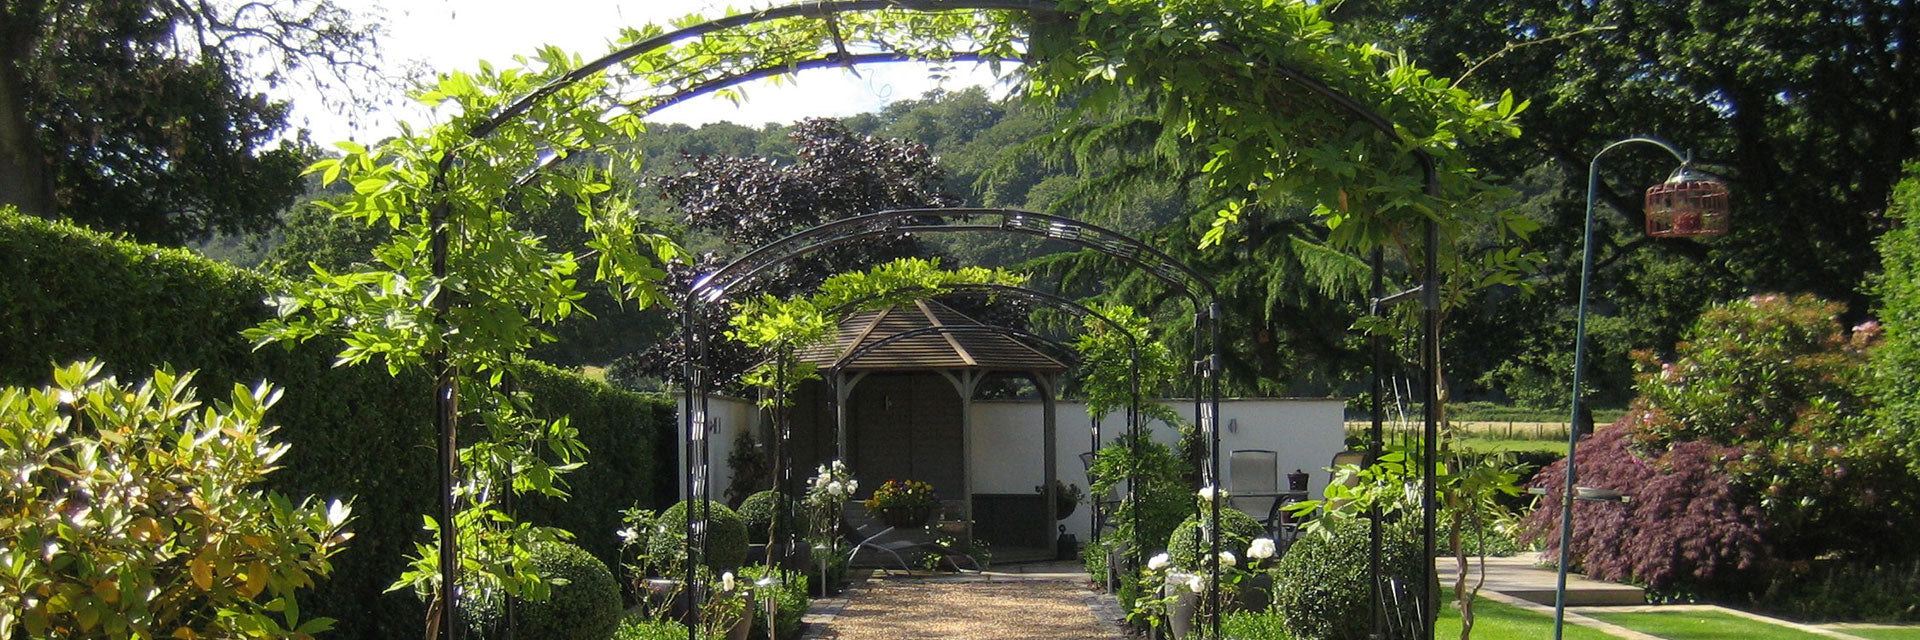 Traditional Garden Arches